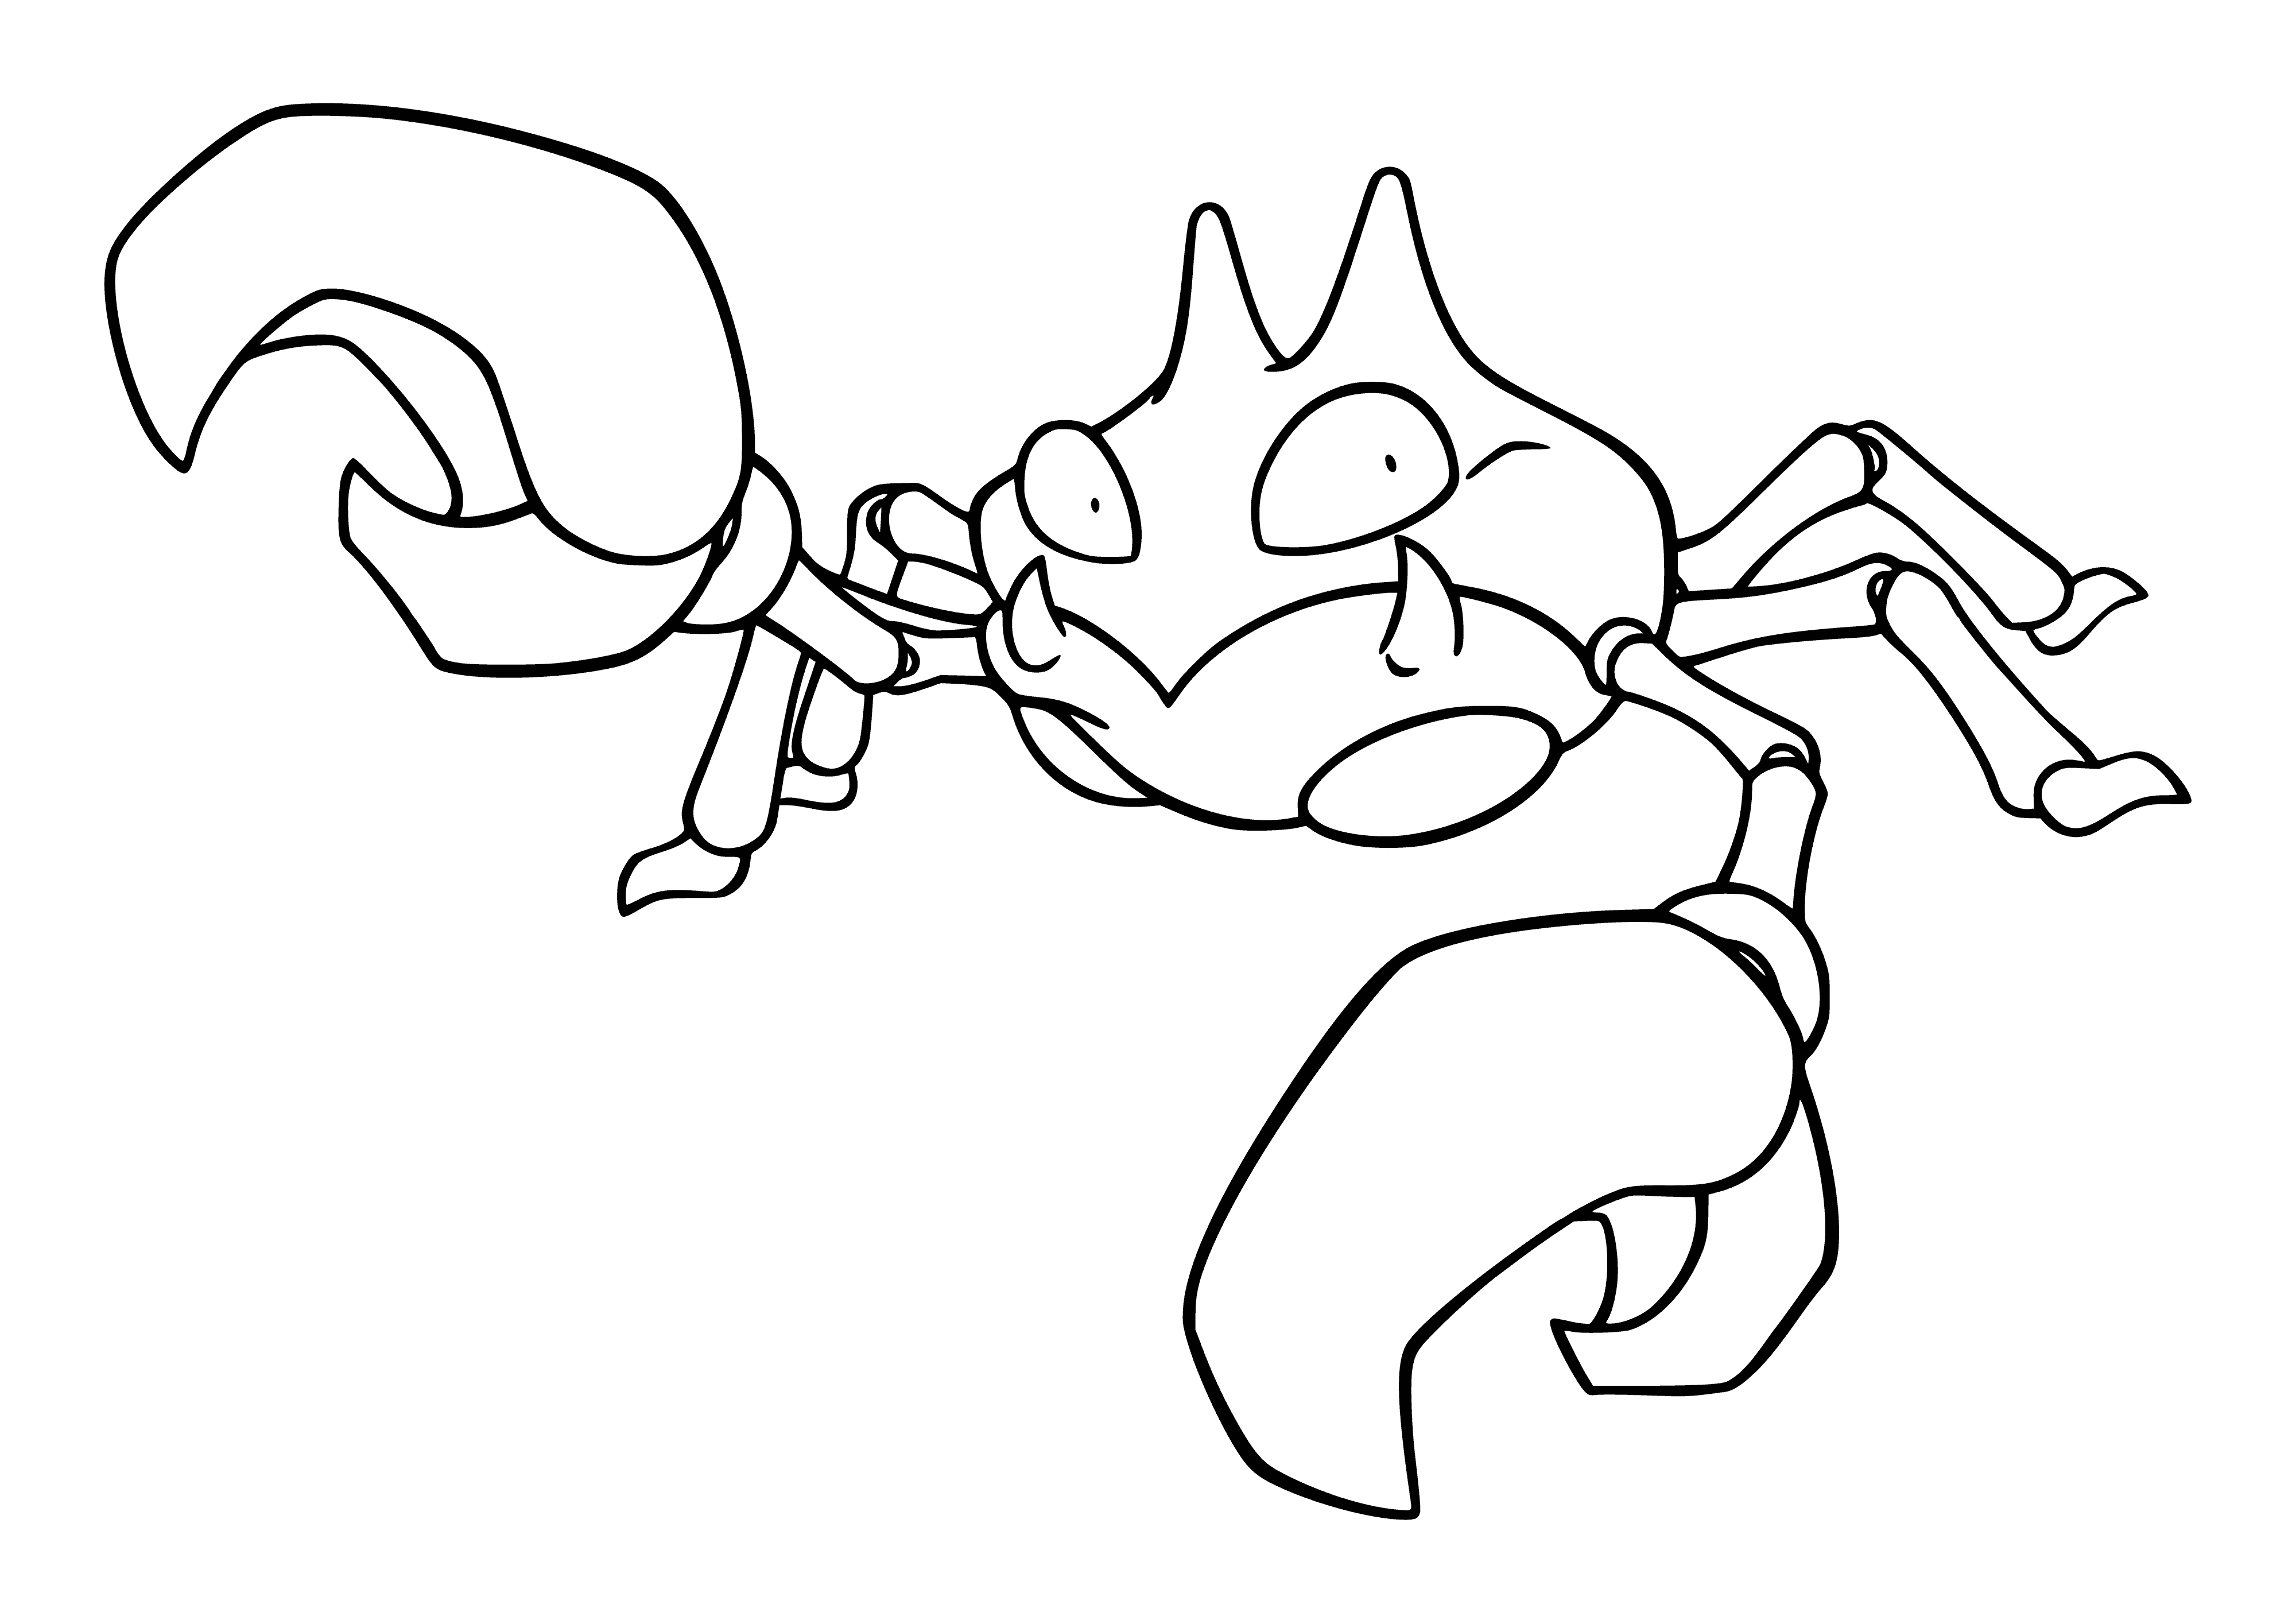 Pokemon Krabby coloring page